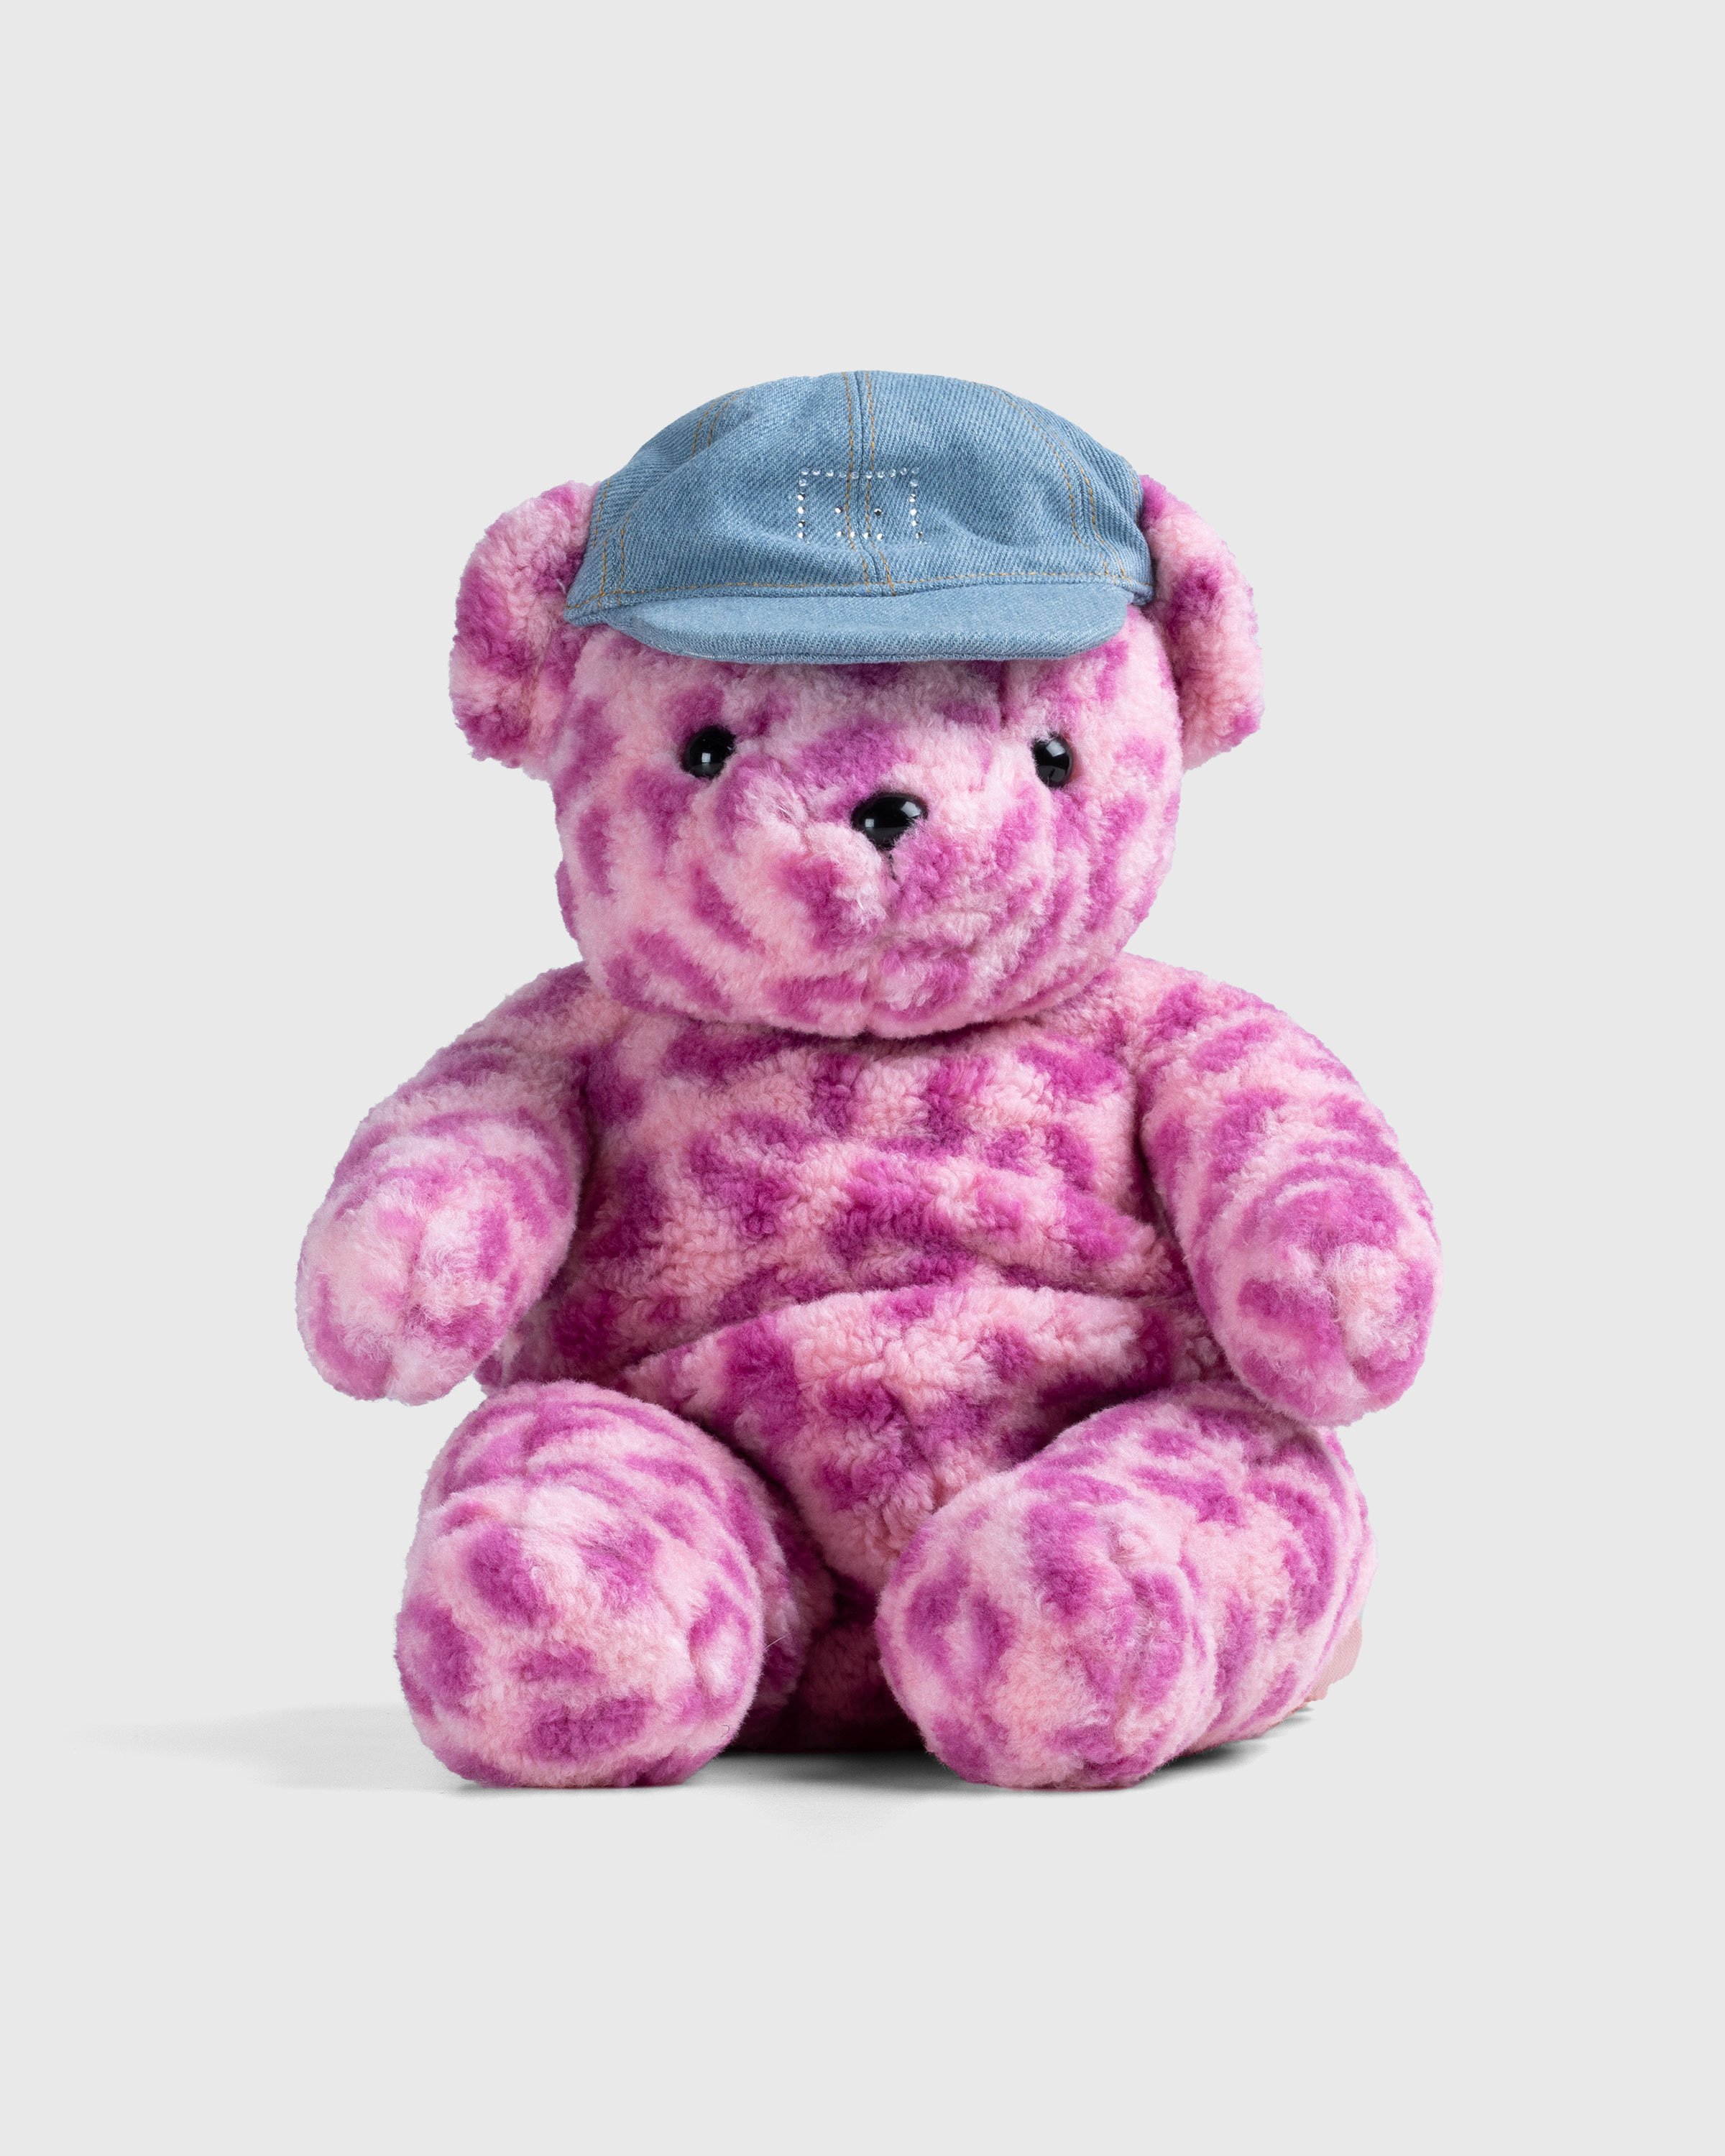 Acne Studios Releases a Luxe Teddy Bear Bag